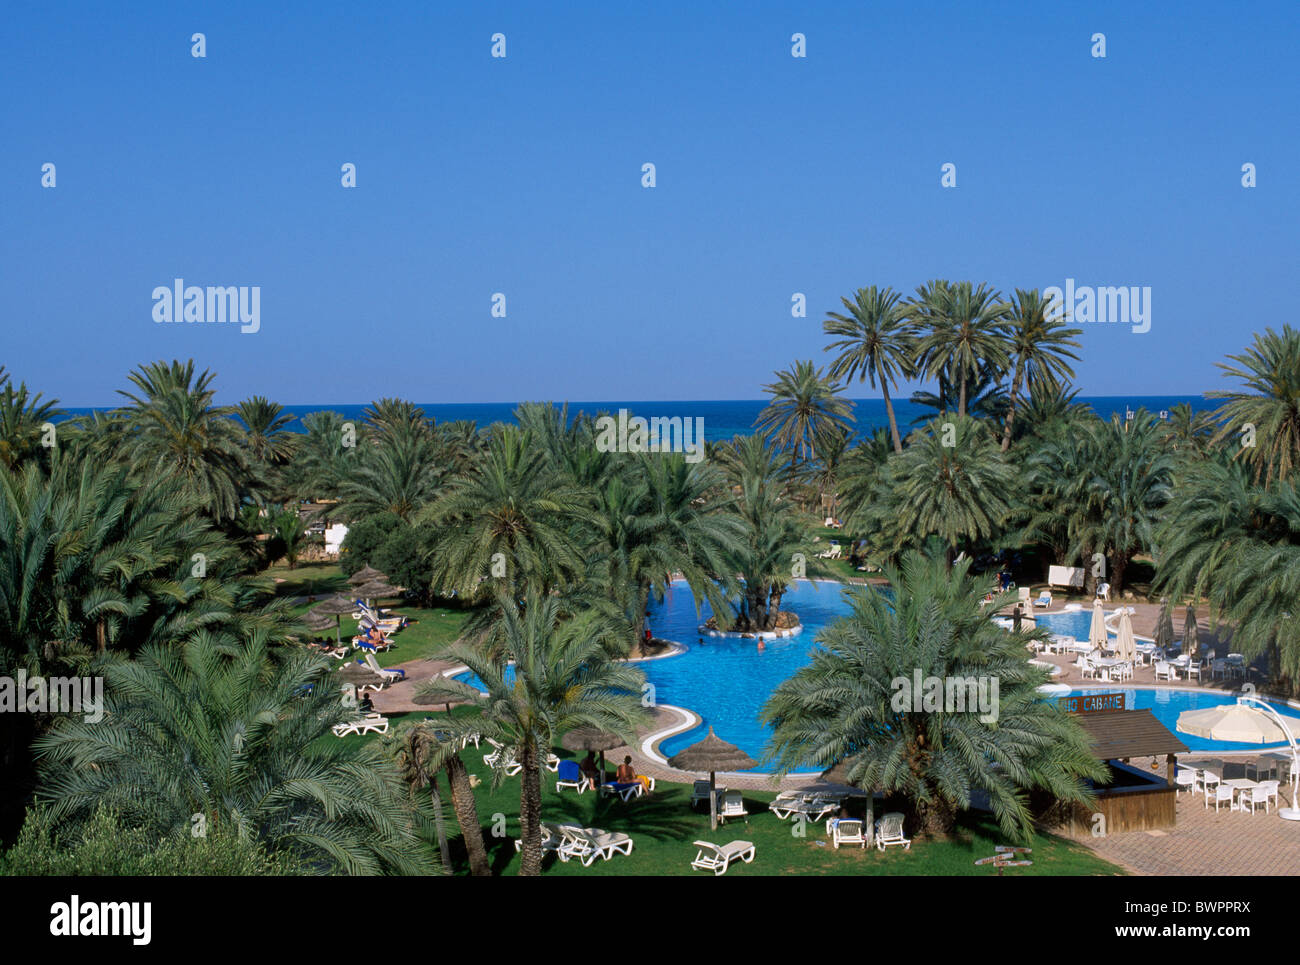 Tunisia Djerba island Hotel Odyssee Zarzis Oasis Africa North Africa Mediterranean Sea coast island Pool bea Stock Photo